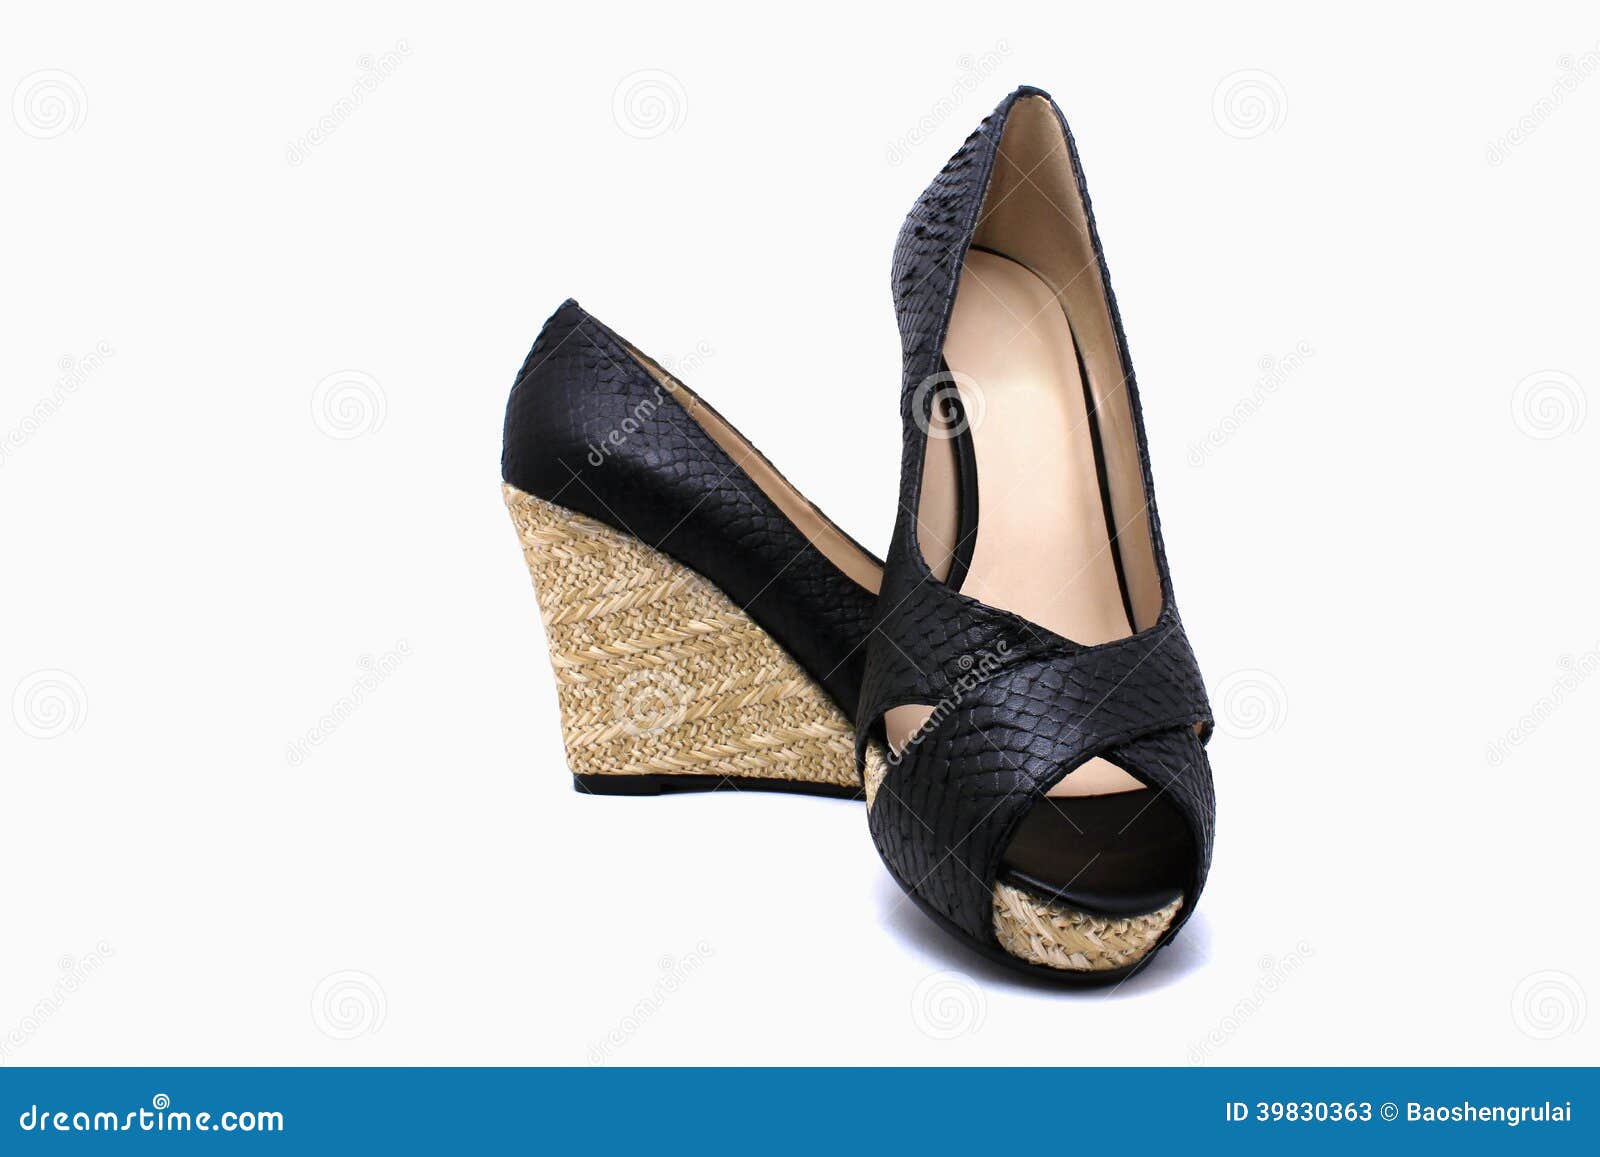 High Heels Women Summer Shoes Wedges Bohemian Women Sandals Flat Platforms  Diamond Beach Sandles Open Toe Women Shoes Beige : : Clothing,  Shoes & Accessories